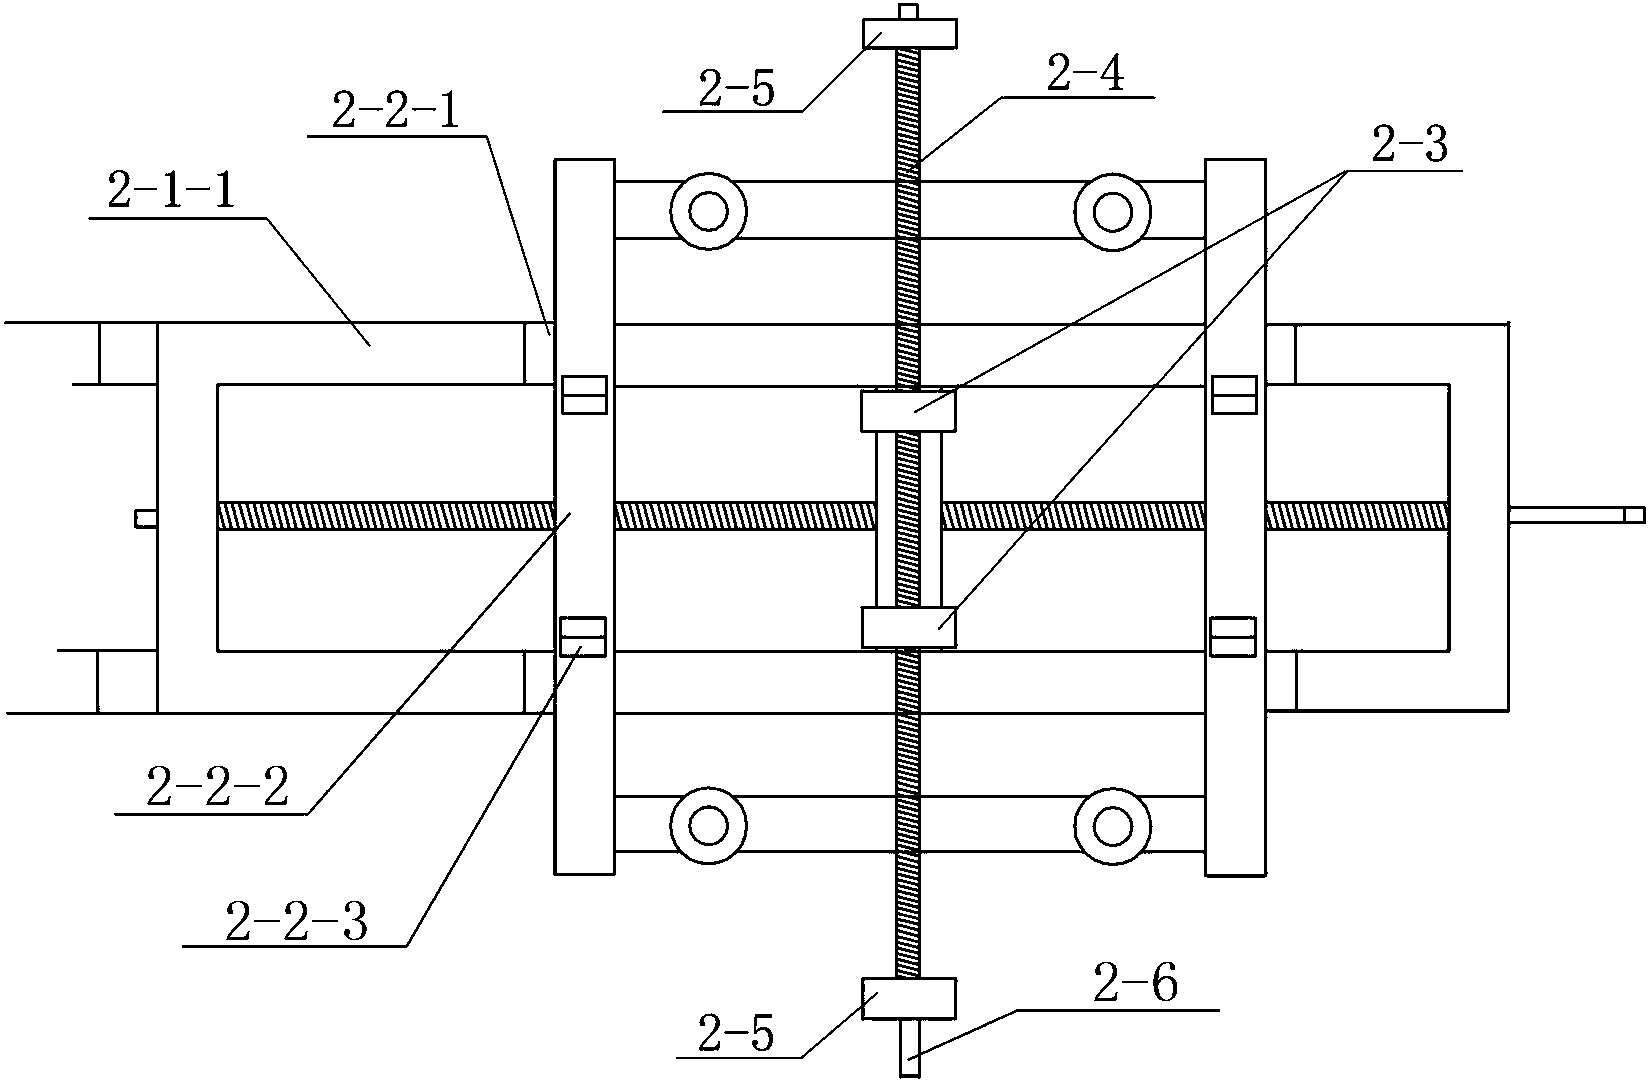 Installation platform for installing operating mechanism of substation outdoor disconnector